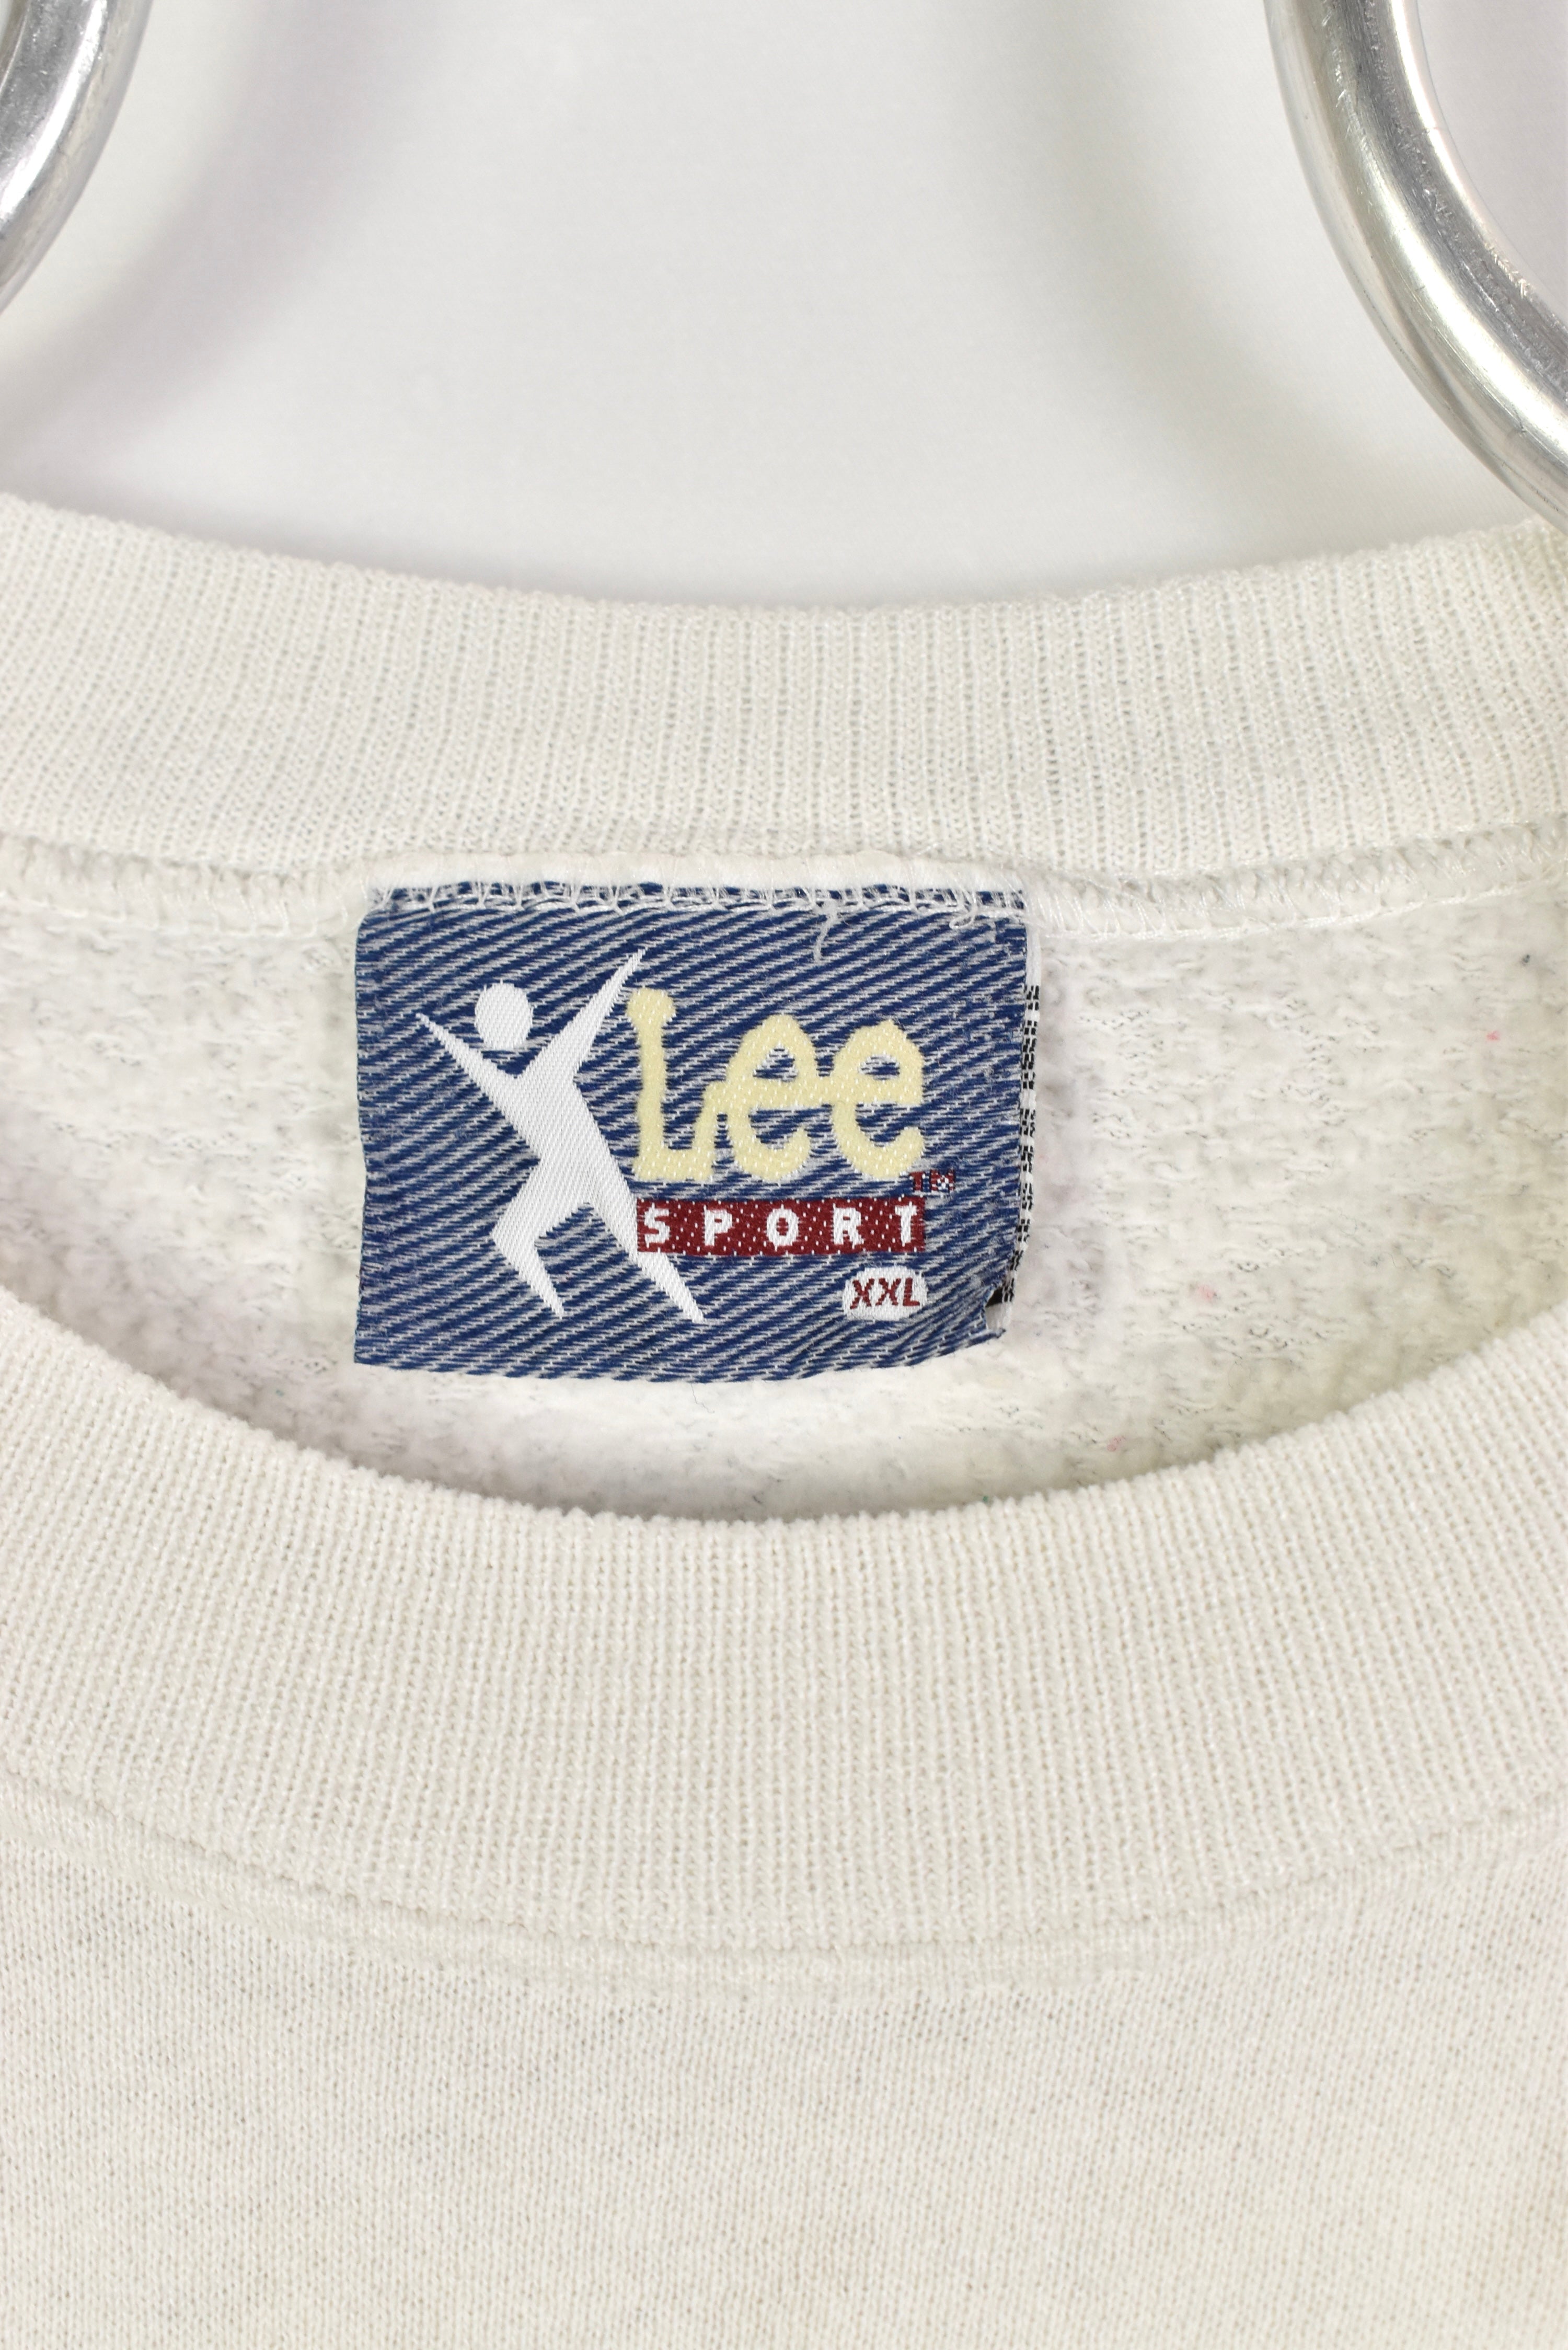 Vintage Green Bay Packers sweatshirt, NFL embroidered crewneck - XXL, white PRO SPORT